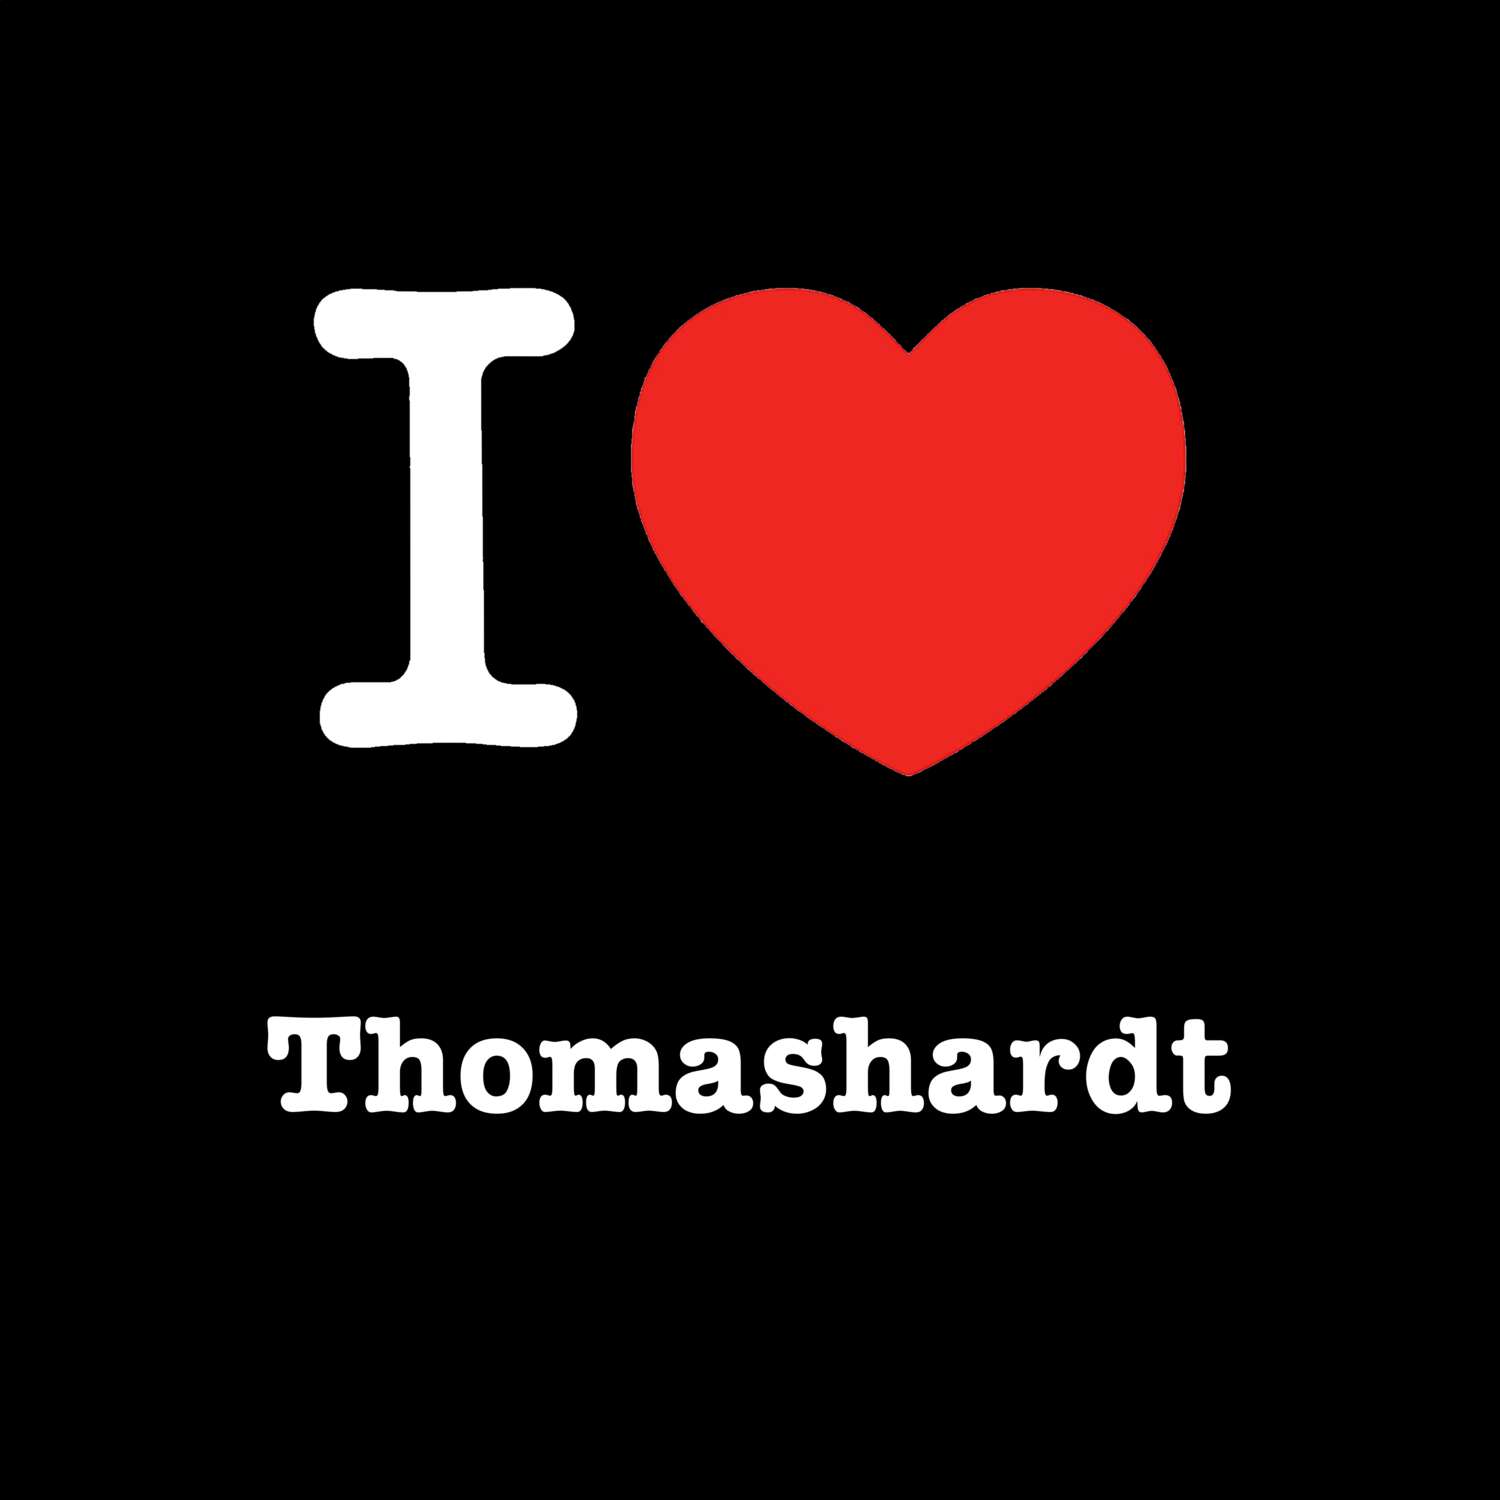 Thomashardt T-Shirt »I love«